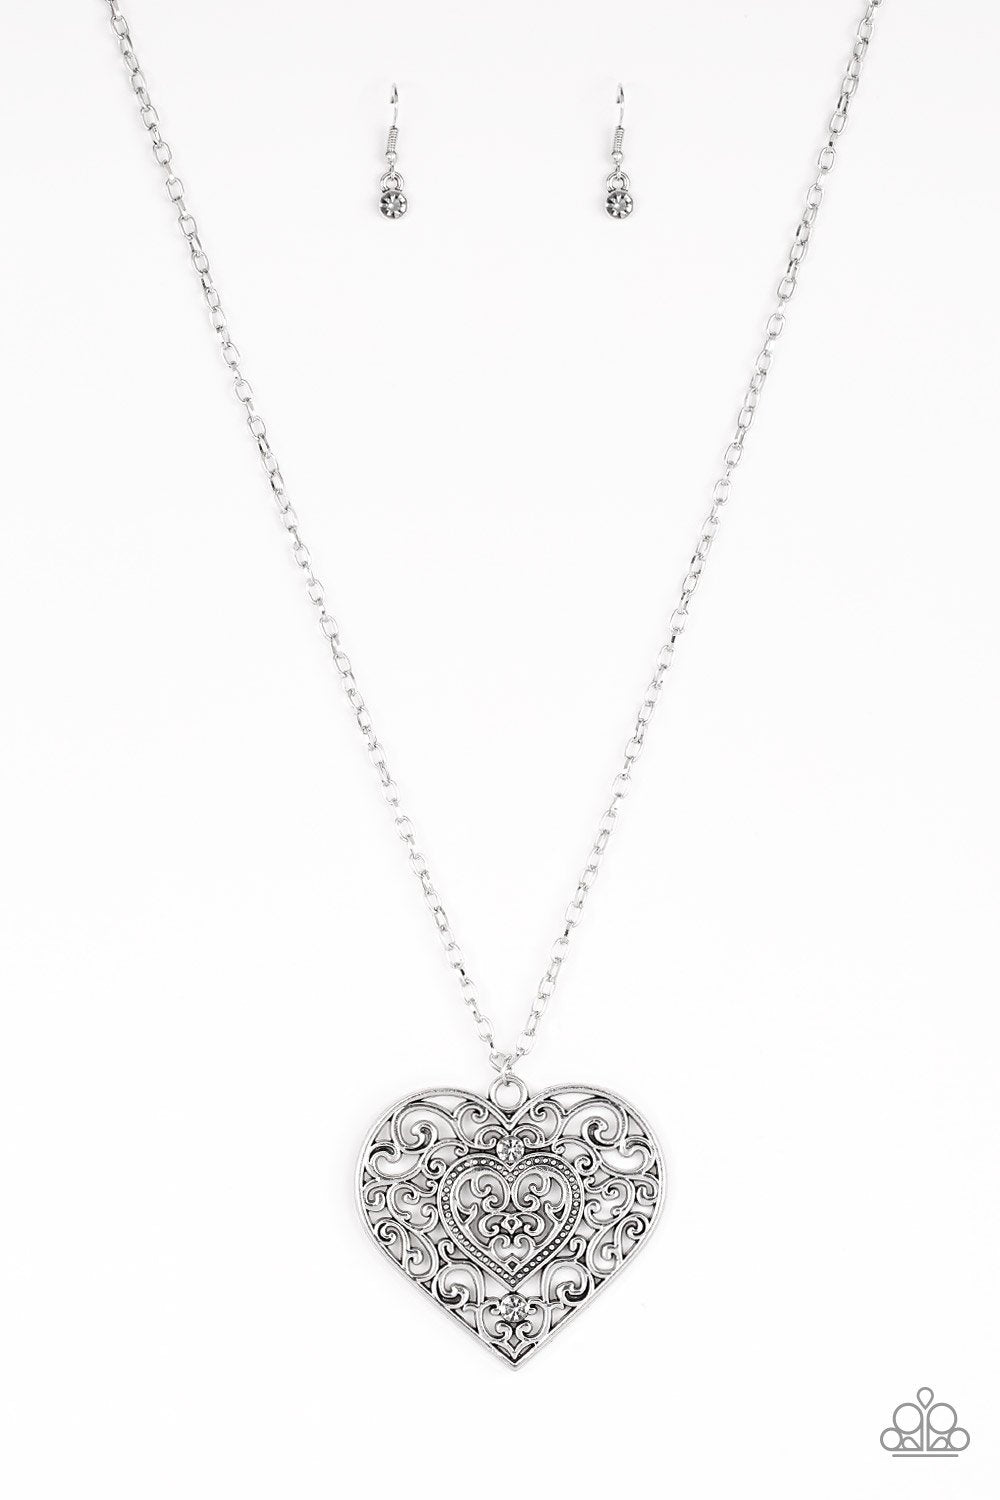 Classic Casanova Silver Filigree Heart Necklace - Paparazzi Accessories - lightbox -CarasShop.com - $5 Jewelry by Cara Jewels